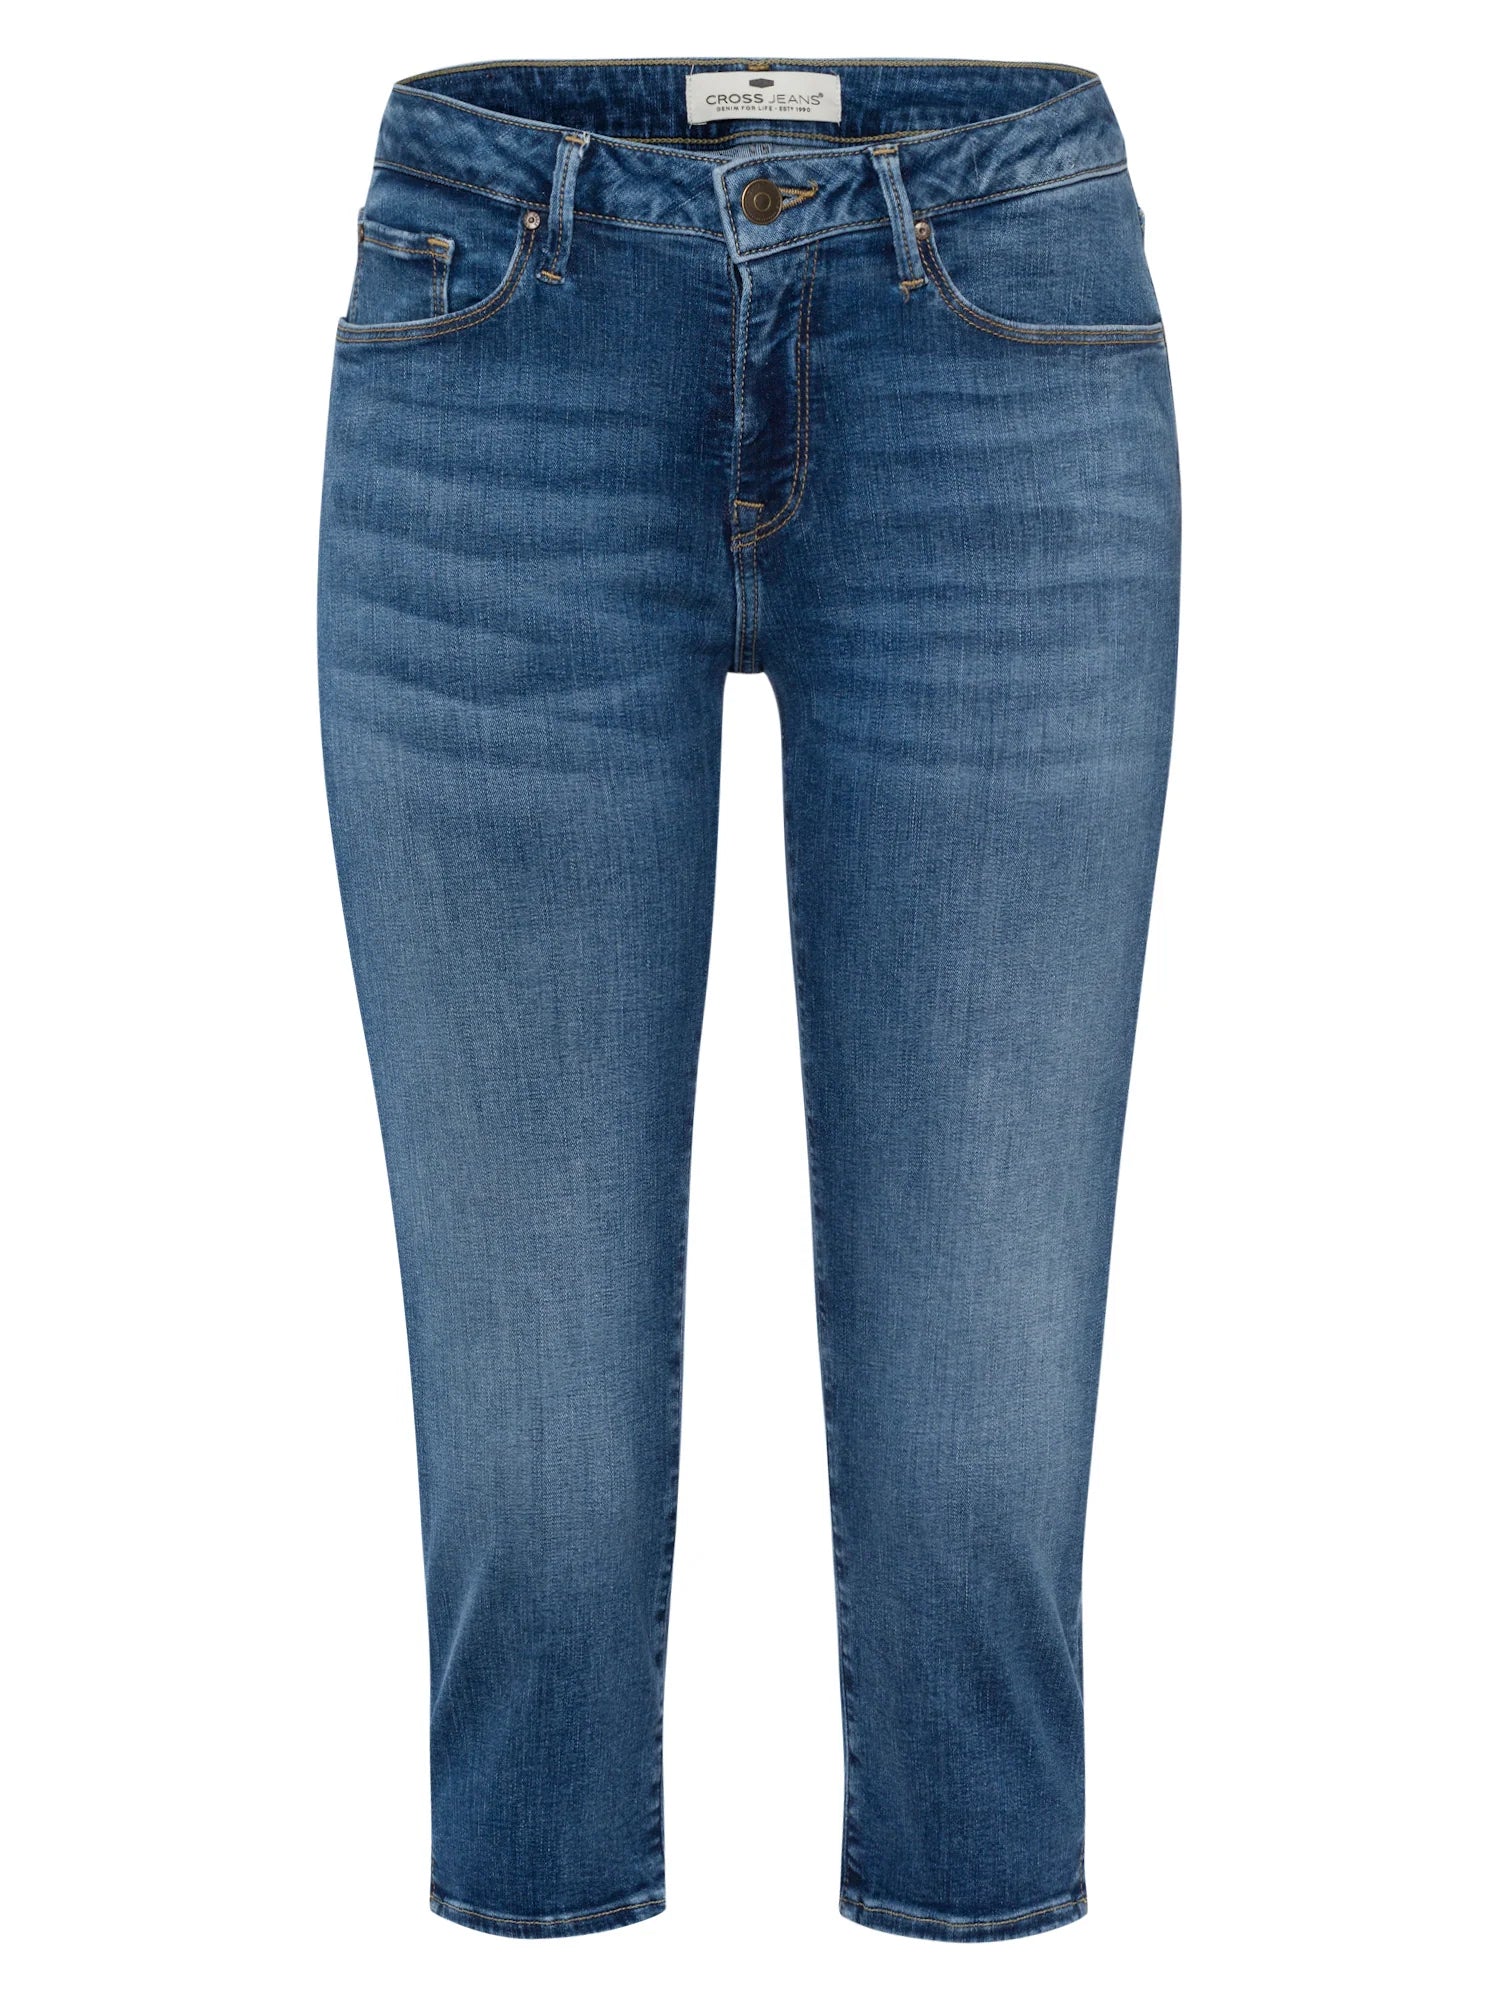 Cross | Amber Jeans Capri | 022 MID BLUE USED